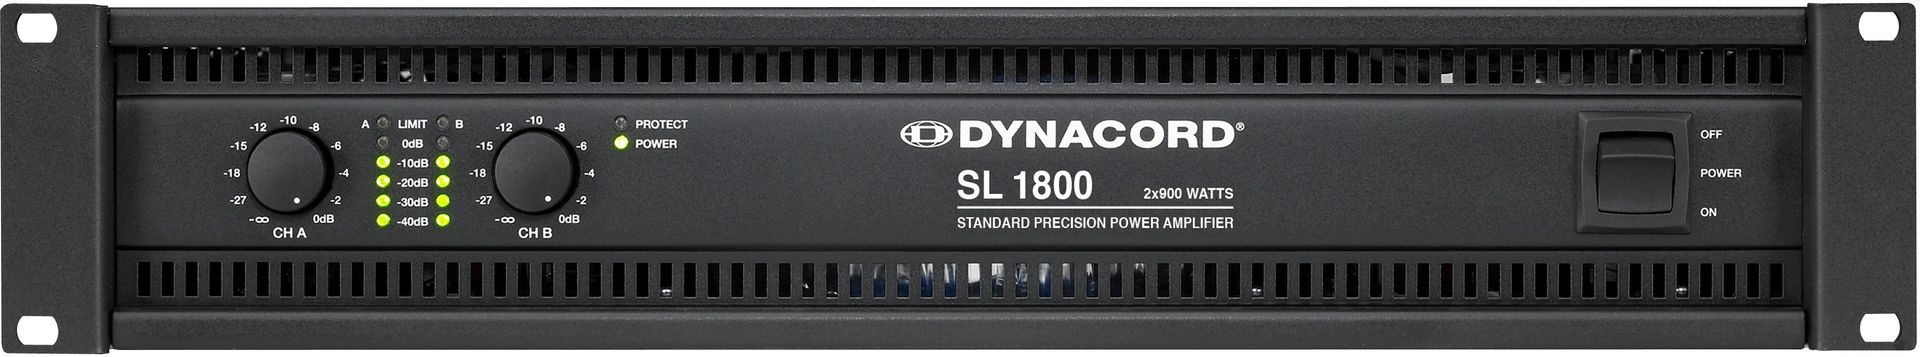 Dynacord SL 1800 Endstufe  2x900 Watt 2HE Power Amp 